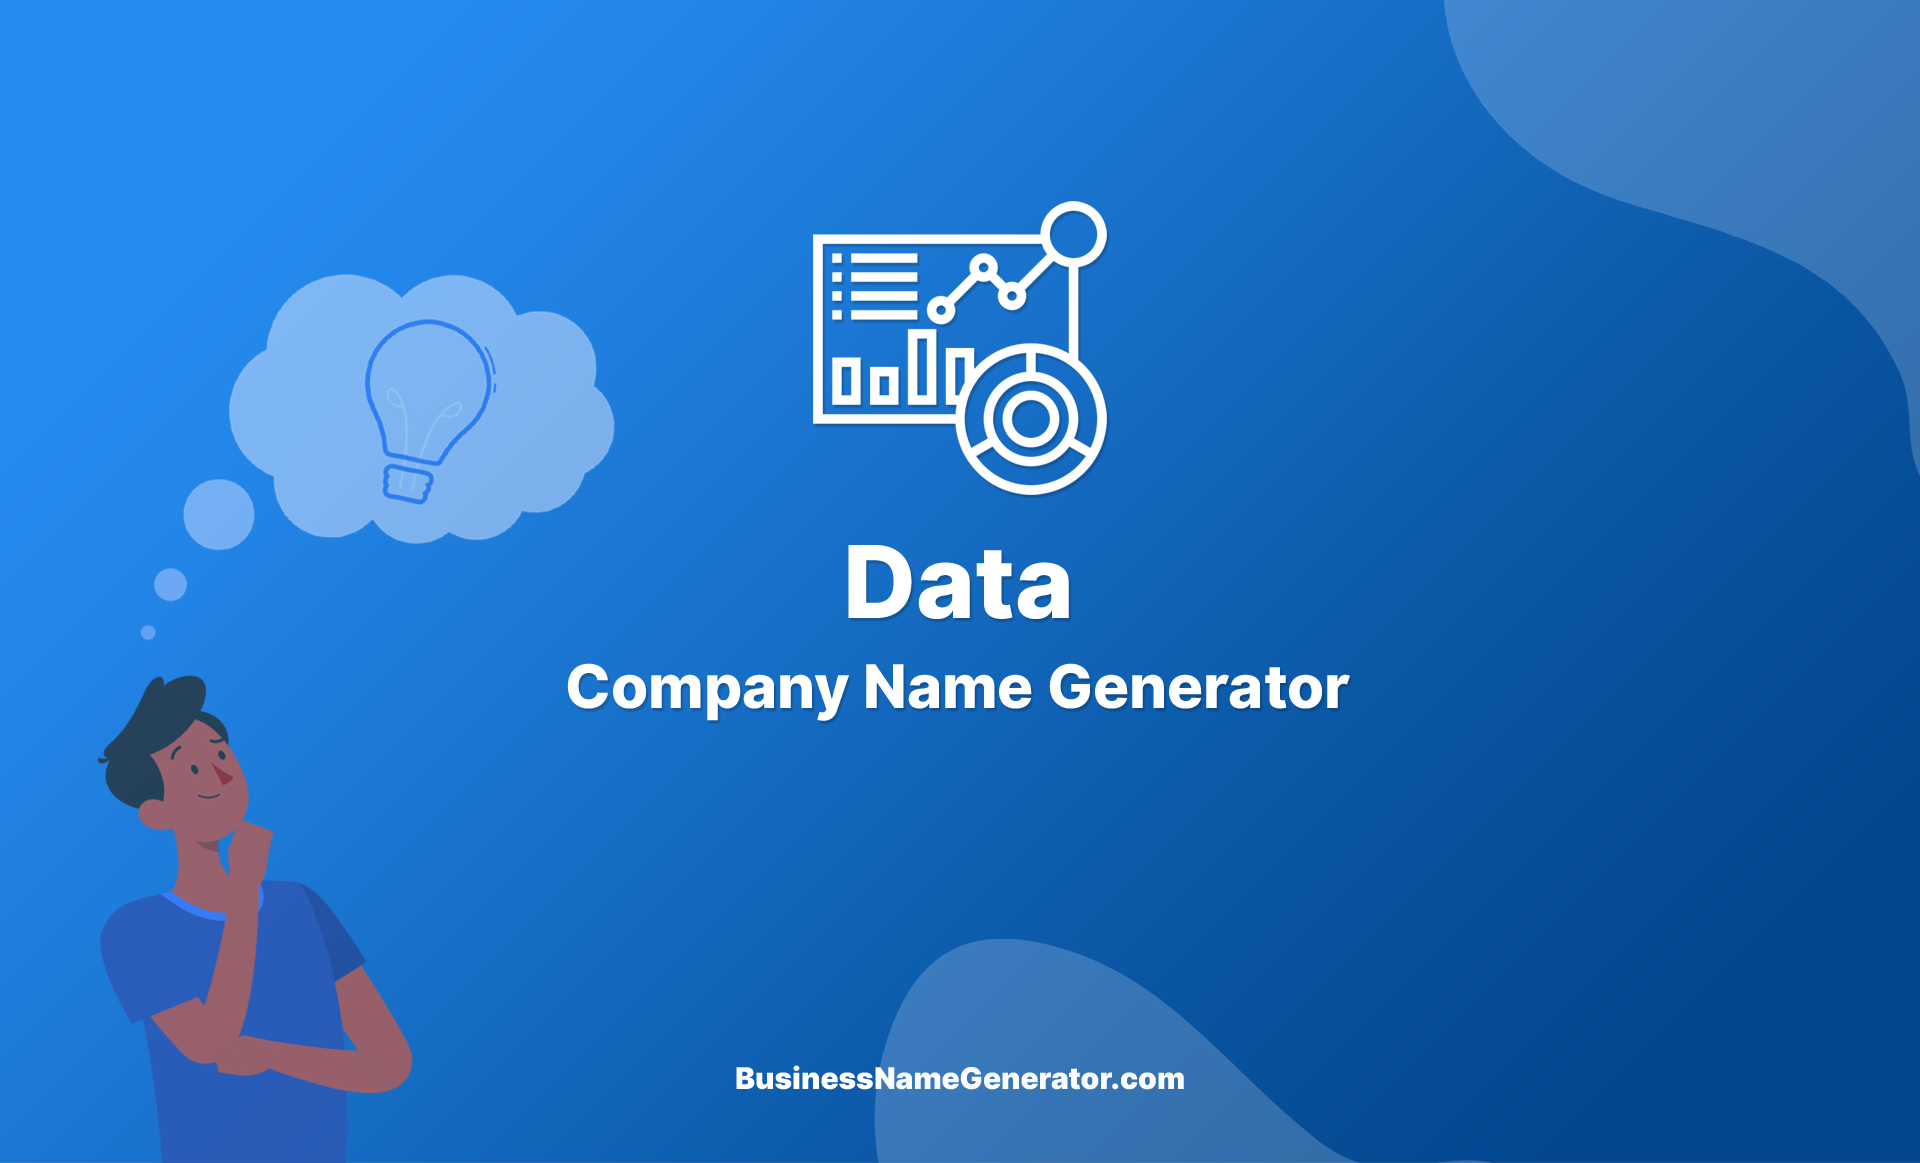 Data Company Name Generator Guide & Ideas